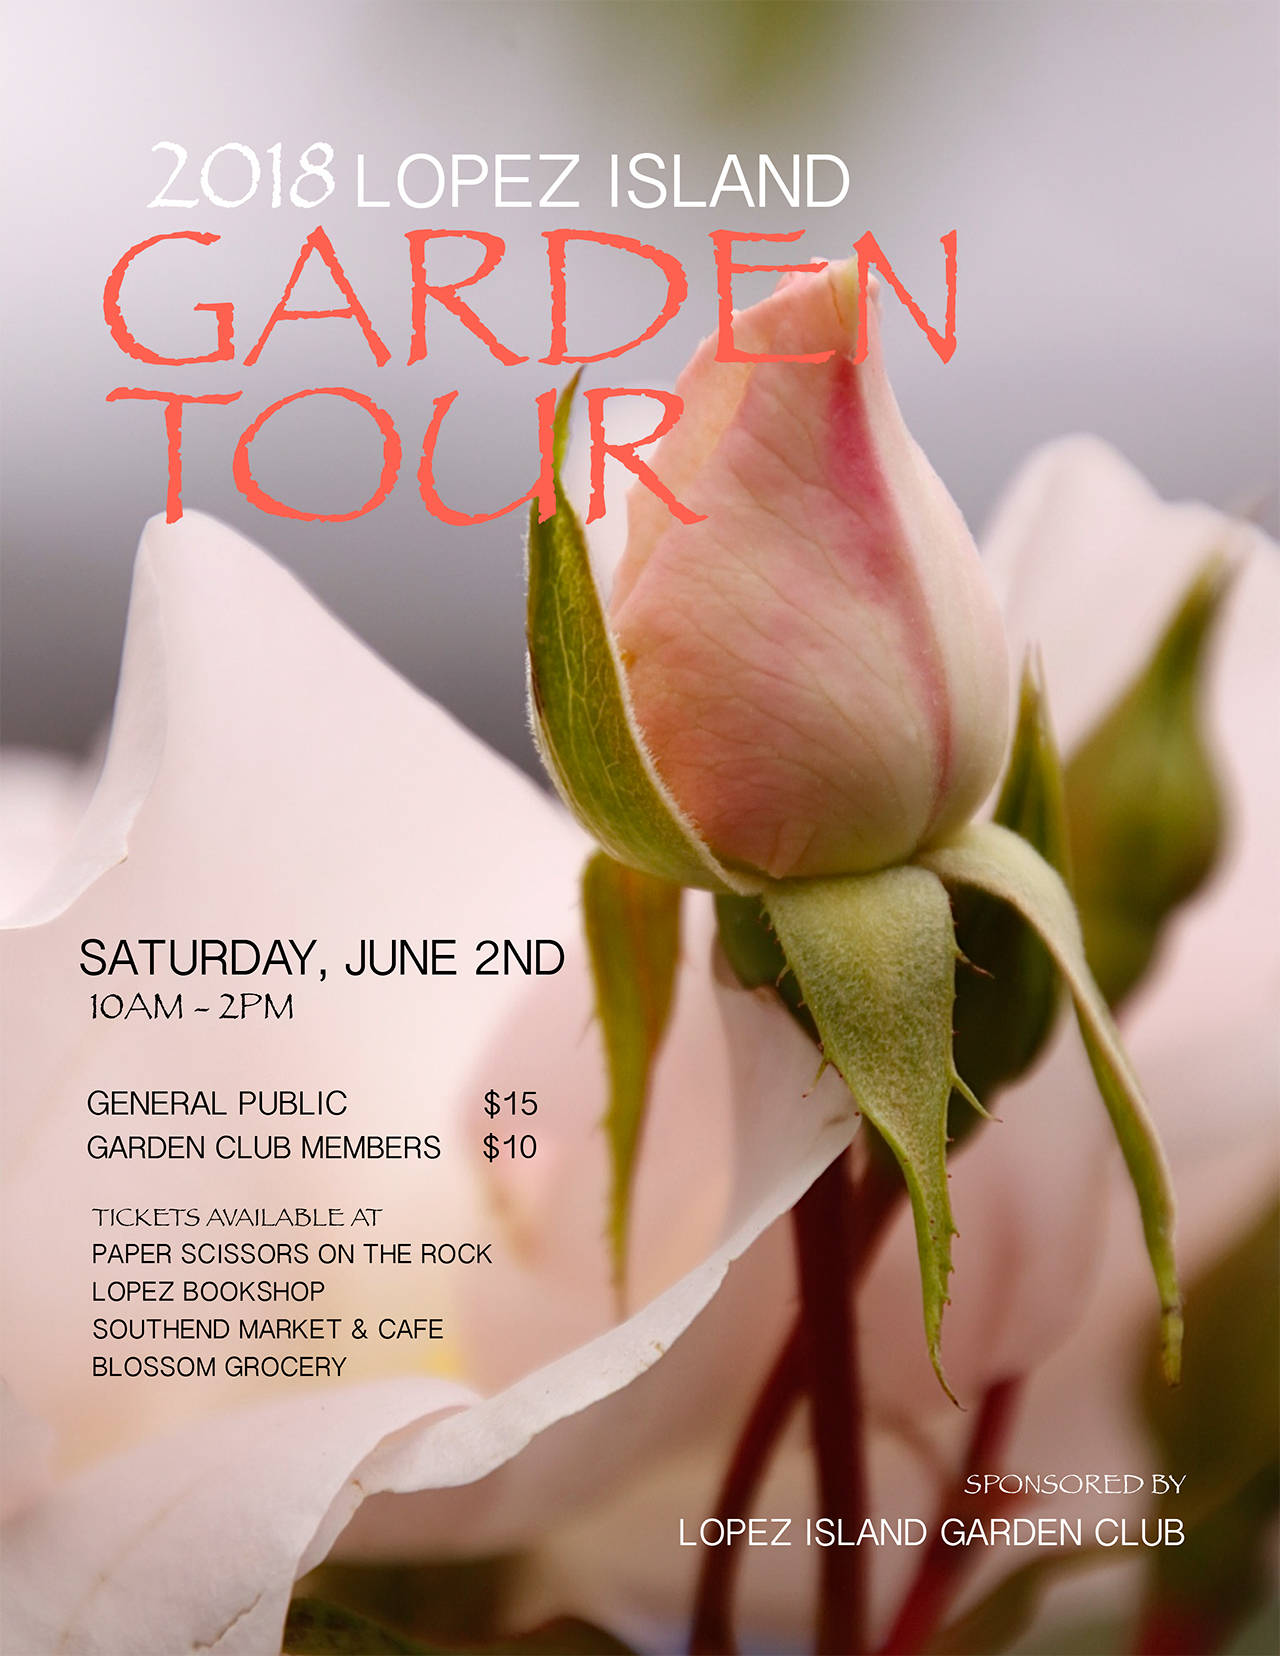 Creativity shines in 2018 Garden Tour, June 2